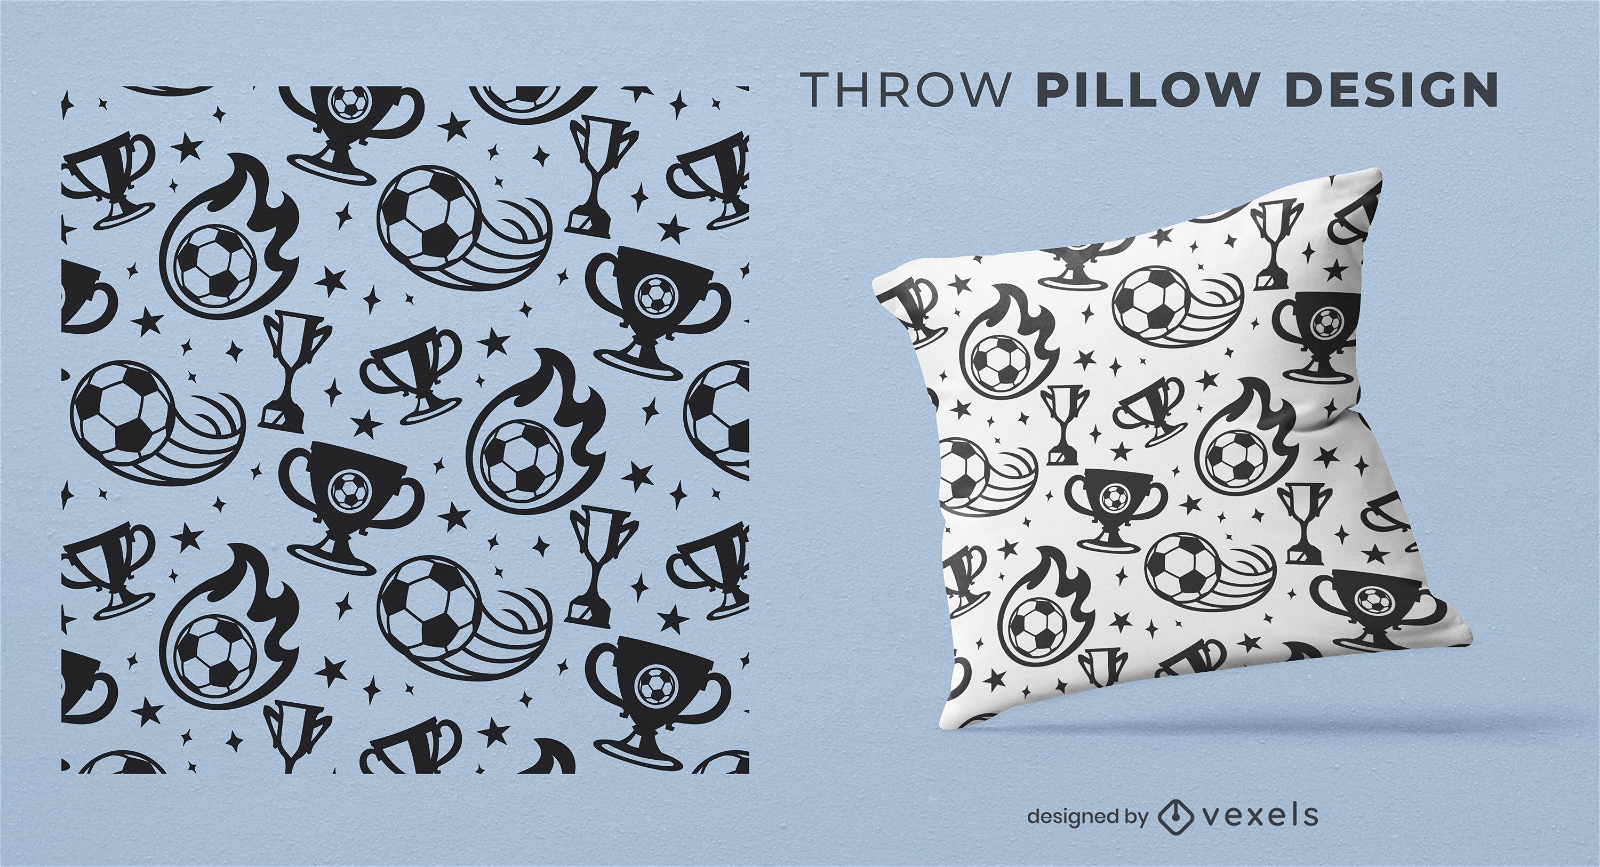 Soccer cup pattern throw pillow design